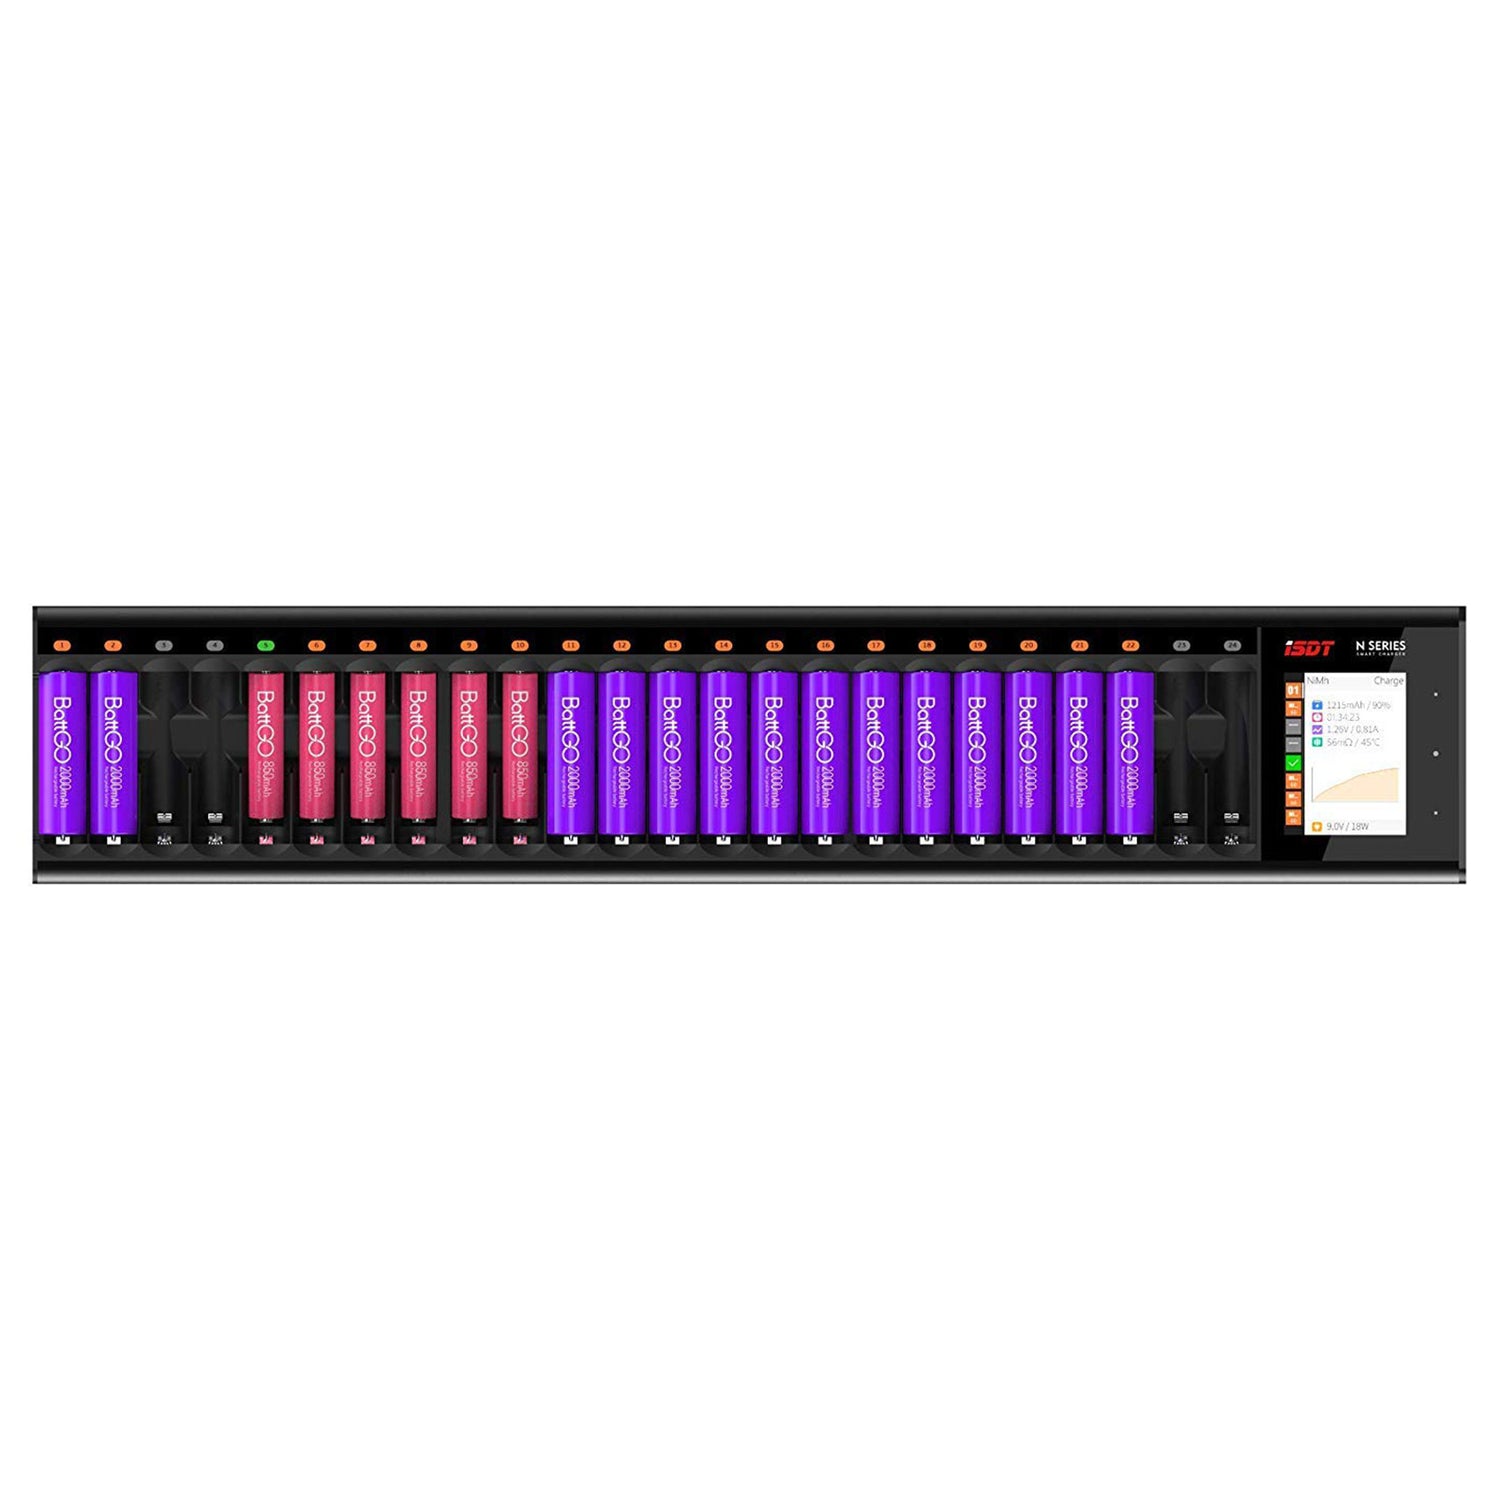 N24 LCD 24-slot baterai Charger untuk baterai isi ulang, pengisi daya cepat 48W untuk baterai AA/AAA